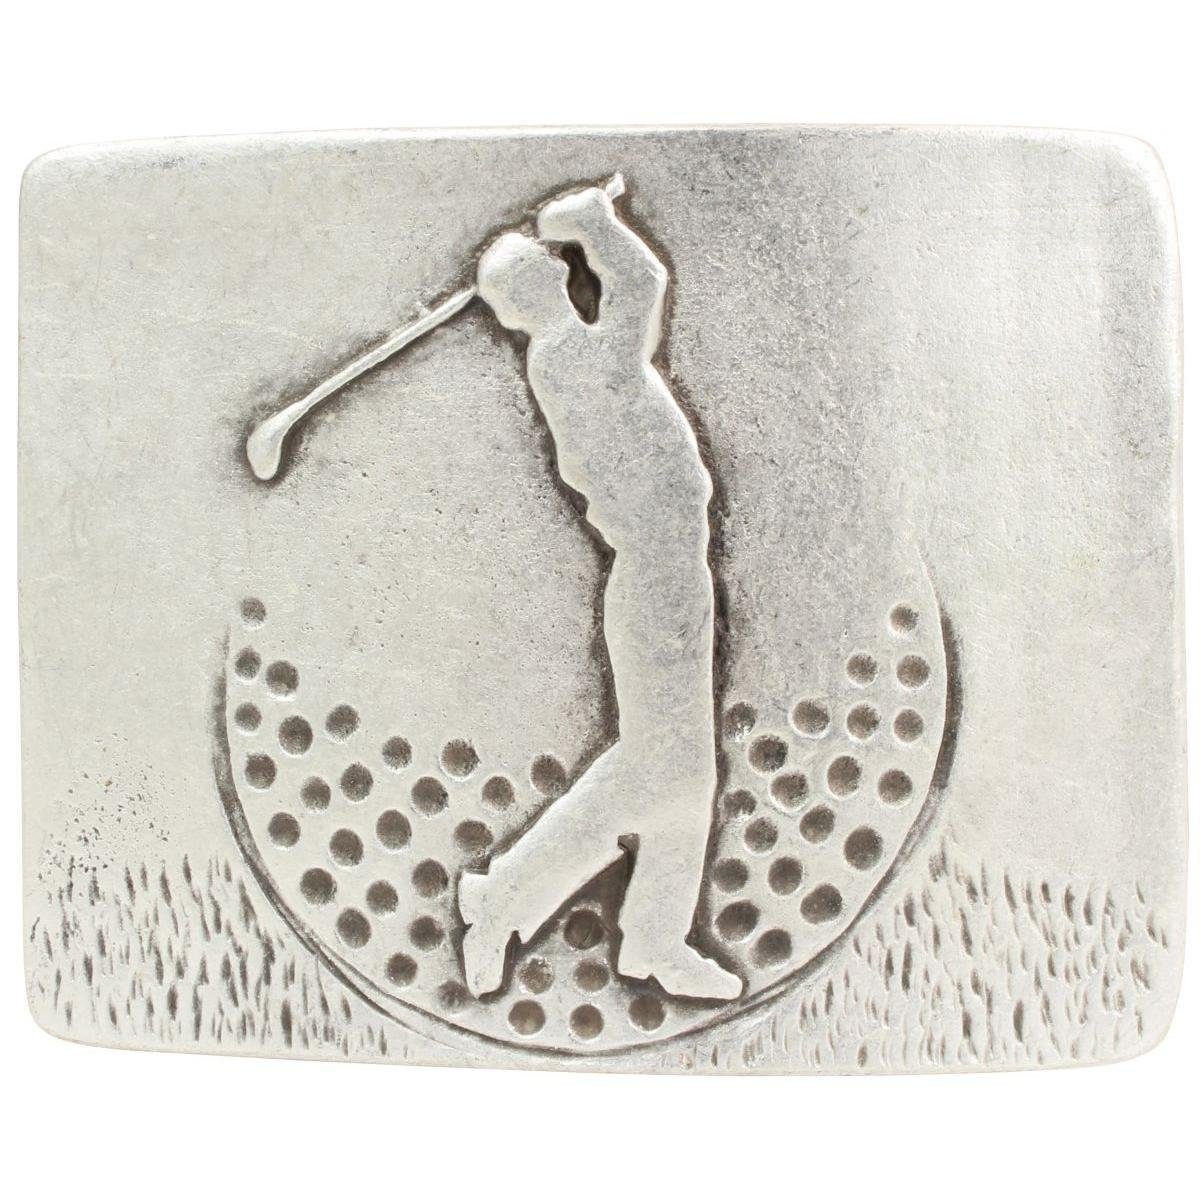 BELTINGER Gürtelschnalle Buckle bi Golfer Gürtel - Wechselschließe Gürtelschließe cm 40mm 4,0 